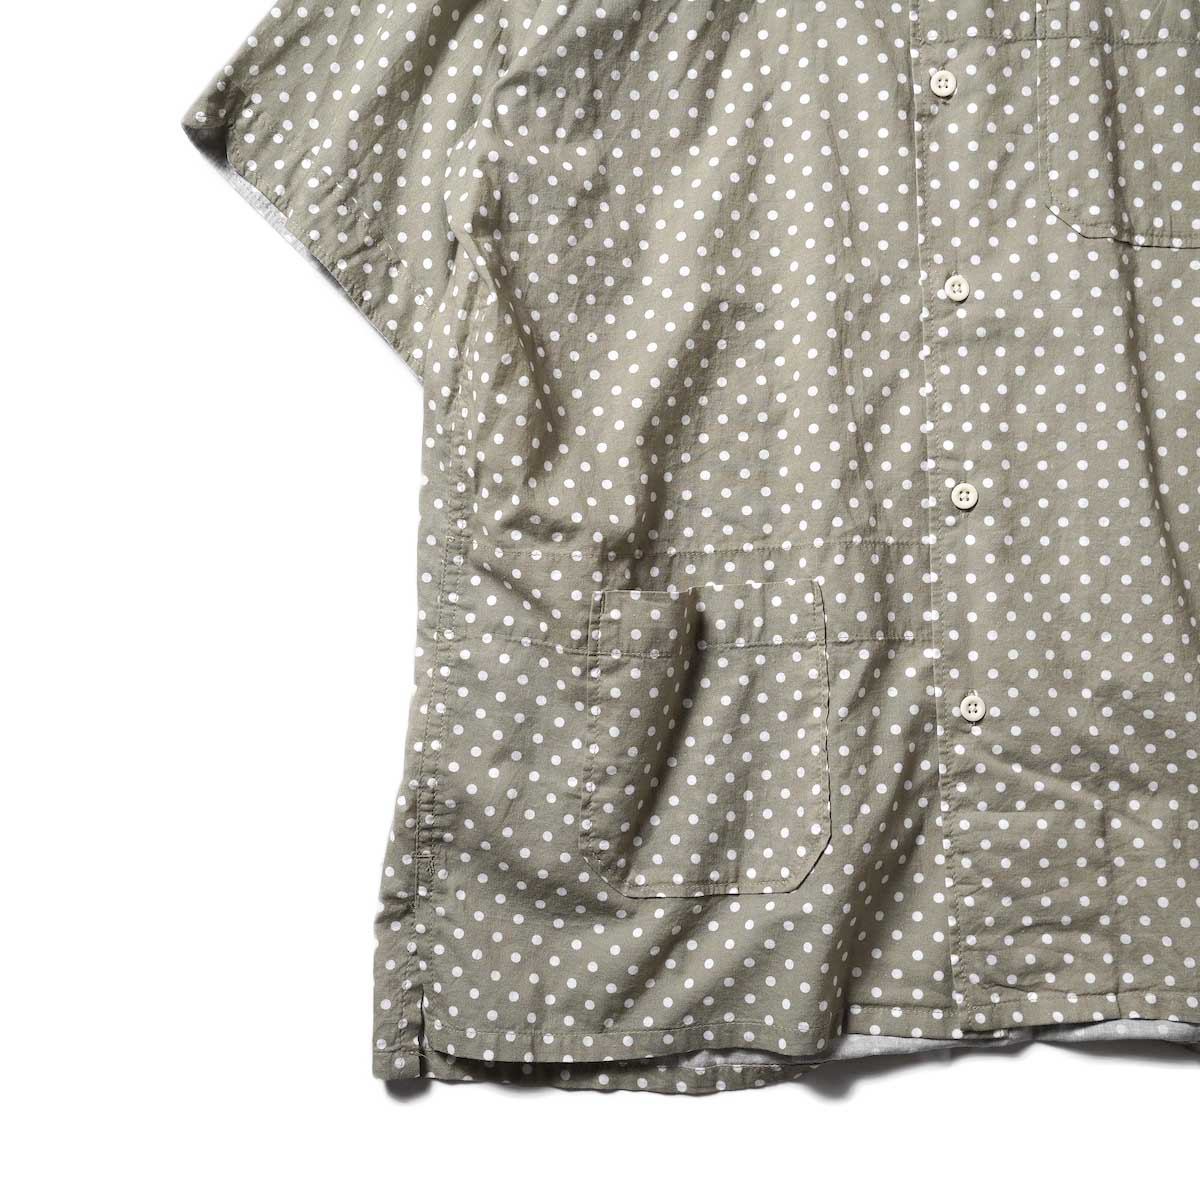 Engineered Garments / Camp Shirt - Polka Dot Cotton Lawn (Tan)裾、袖